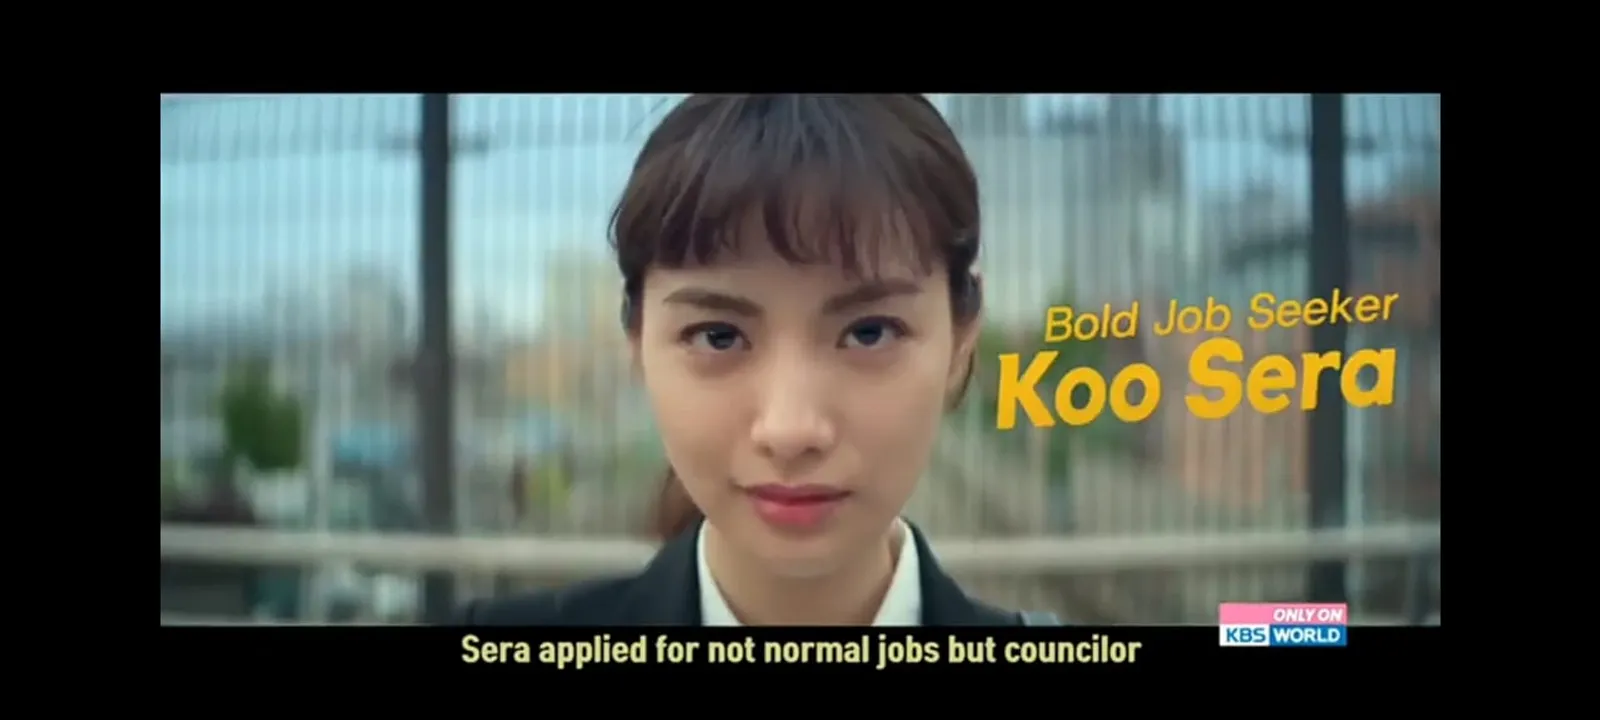 11 Potret Nana 'After School' Dalam Drama & Film Korea, Ada Favoritmu?